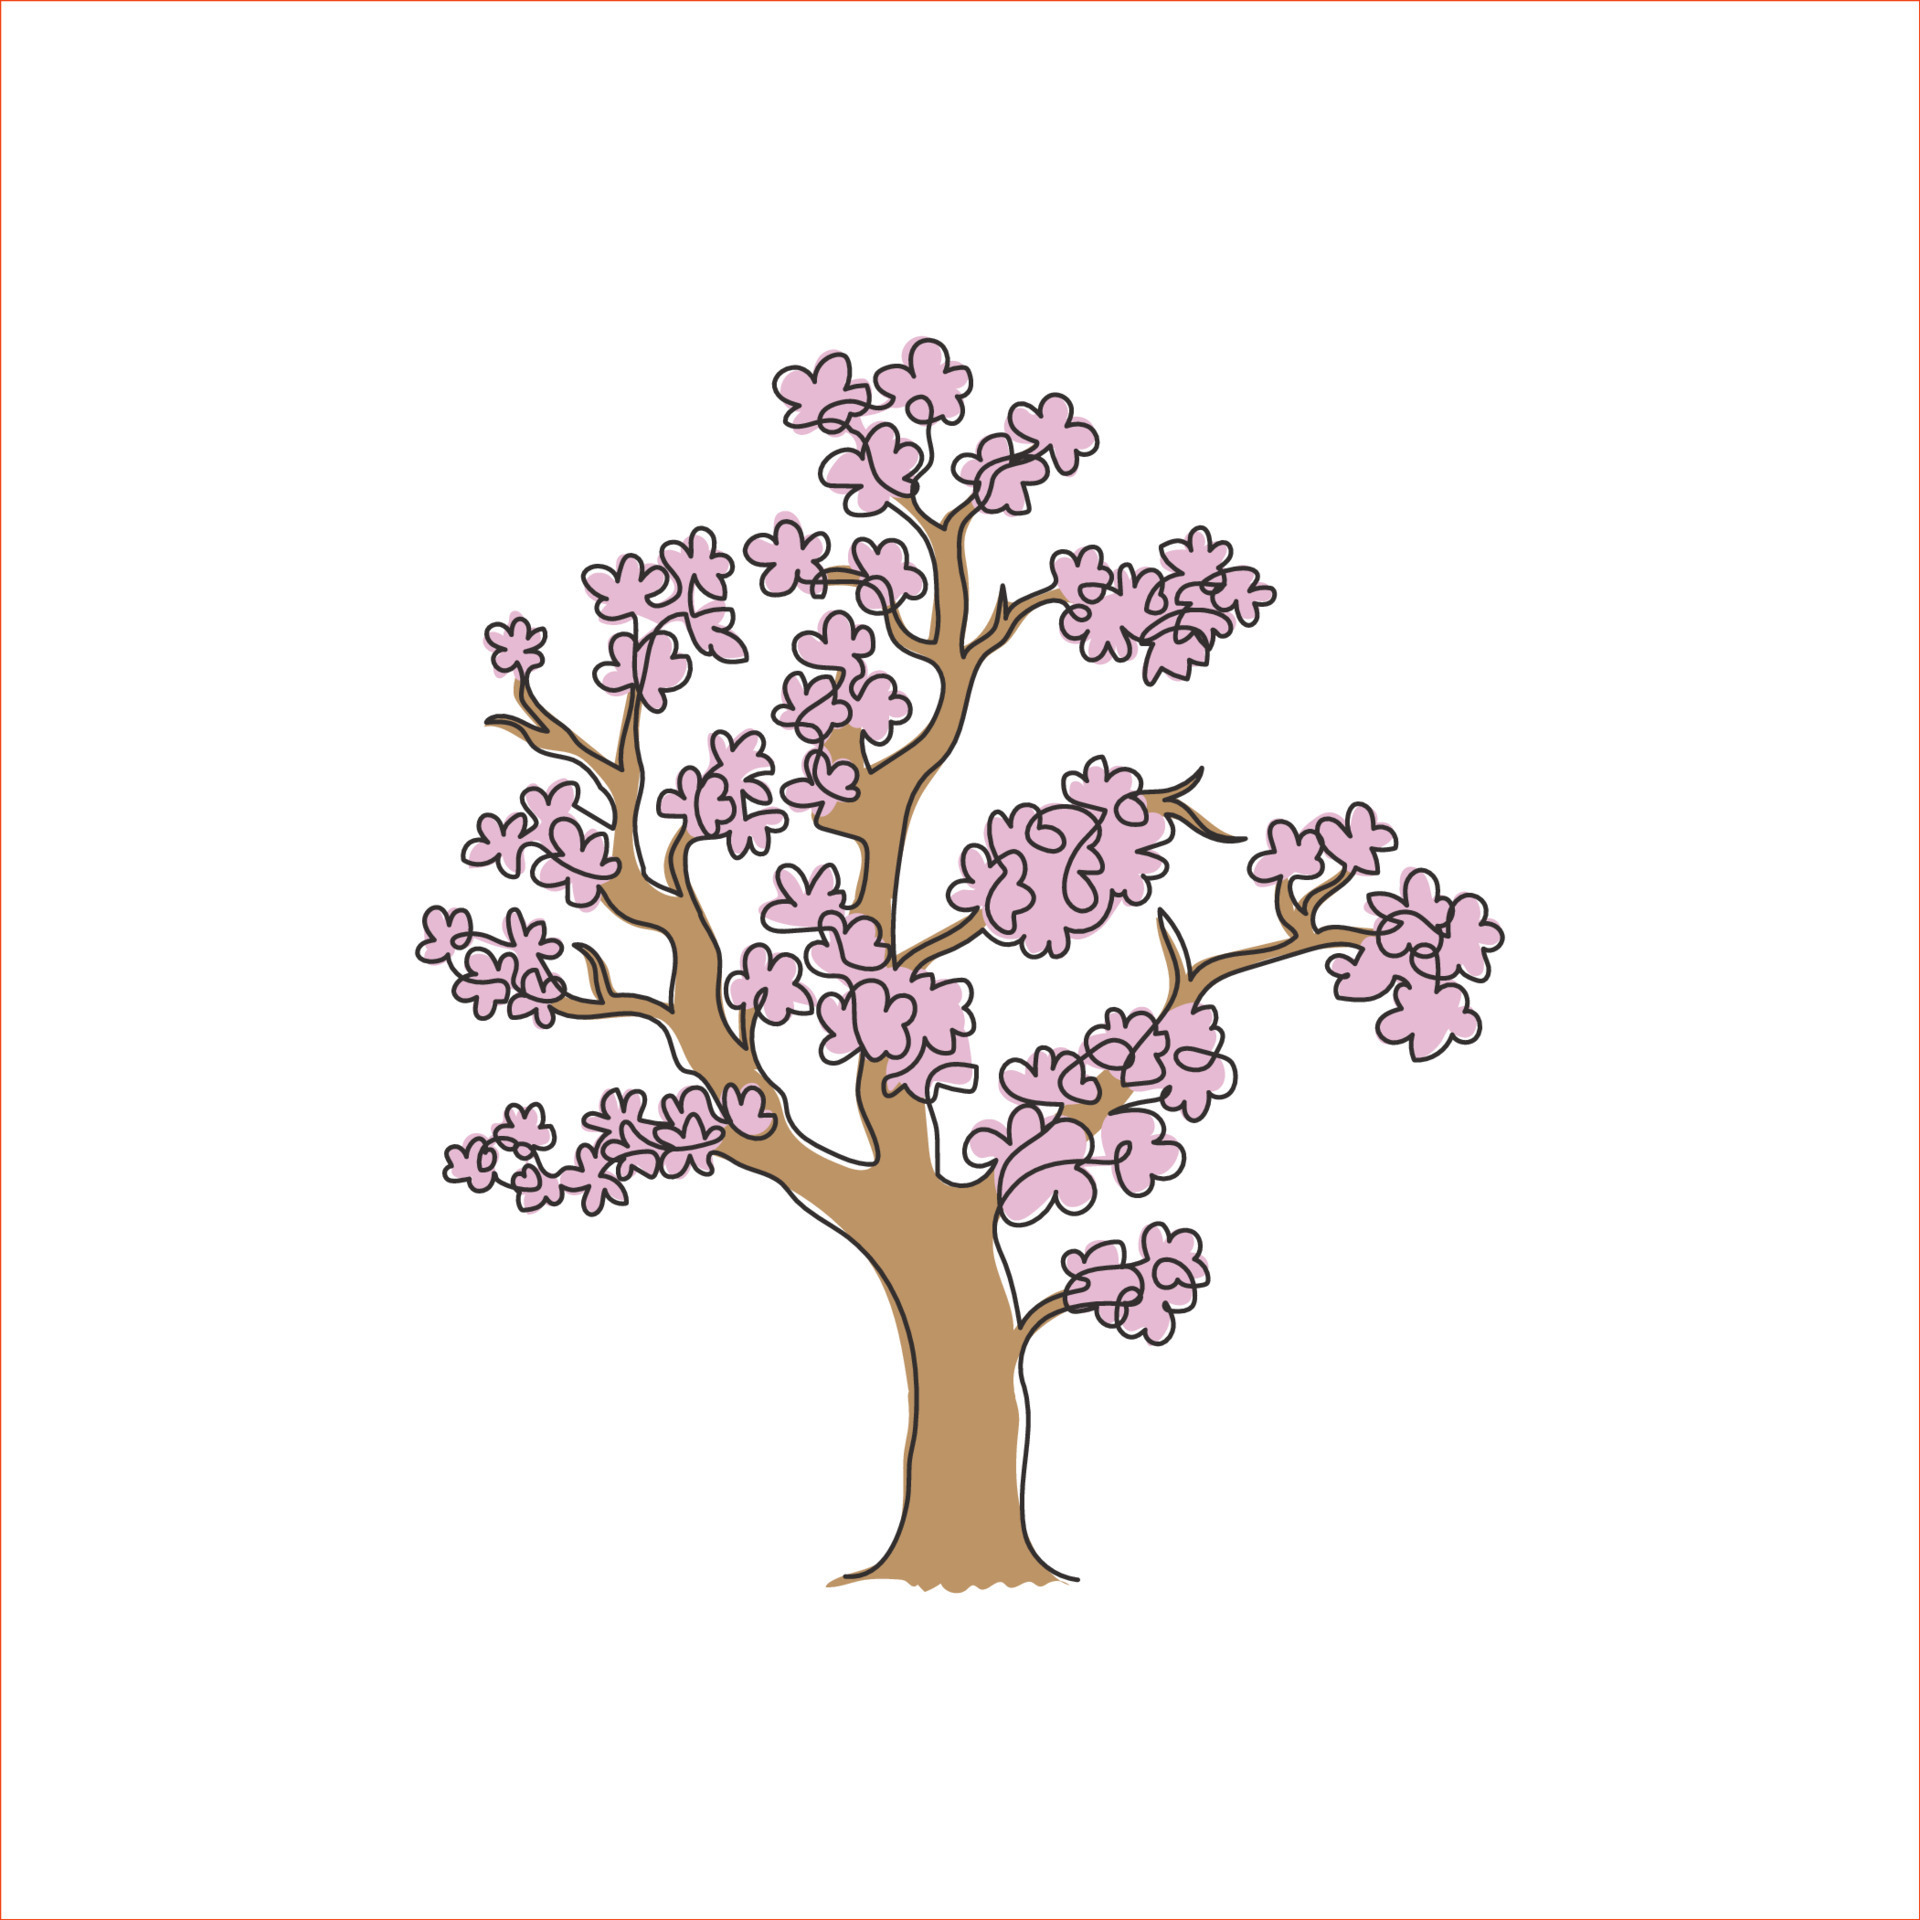 Cherry Blossom tree by Mpimpisillustrations on DeviantArt